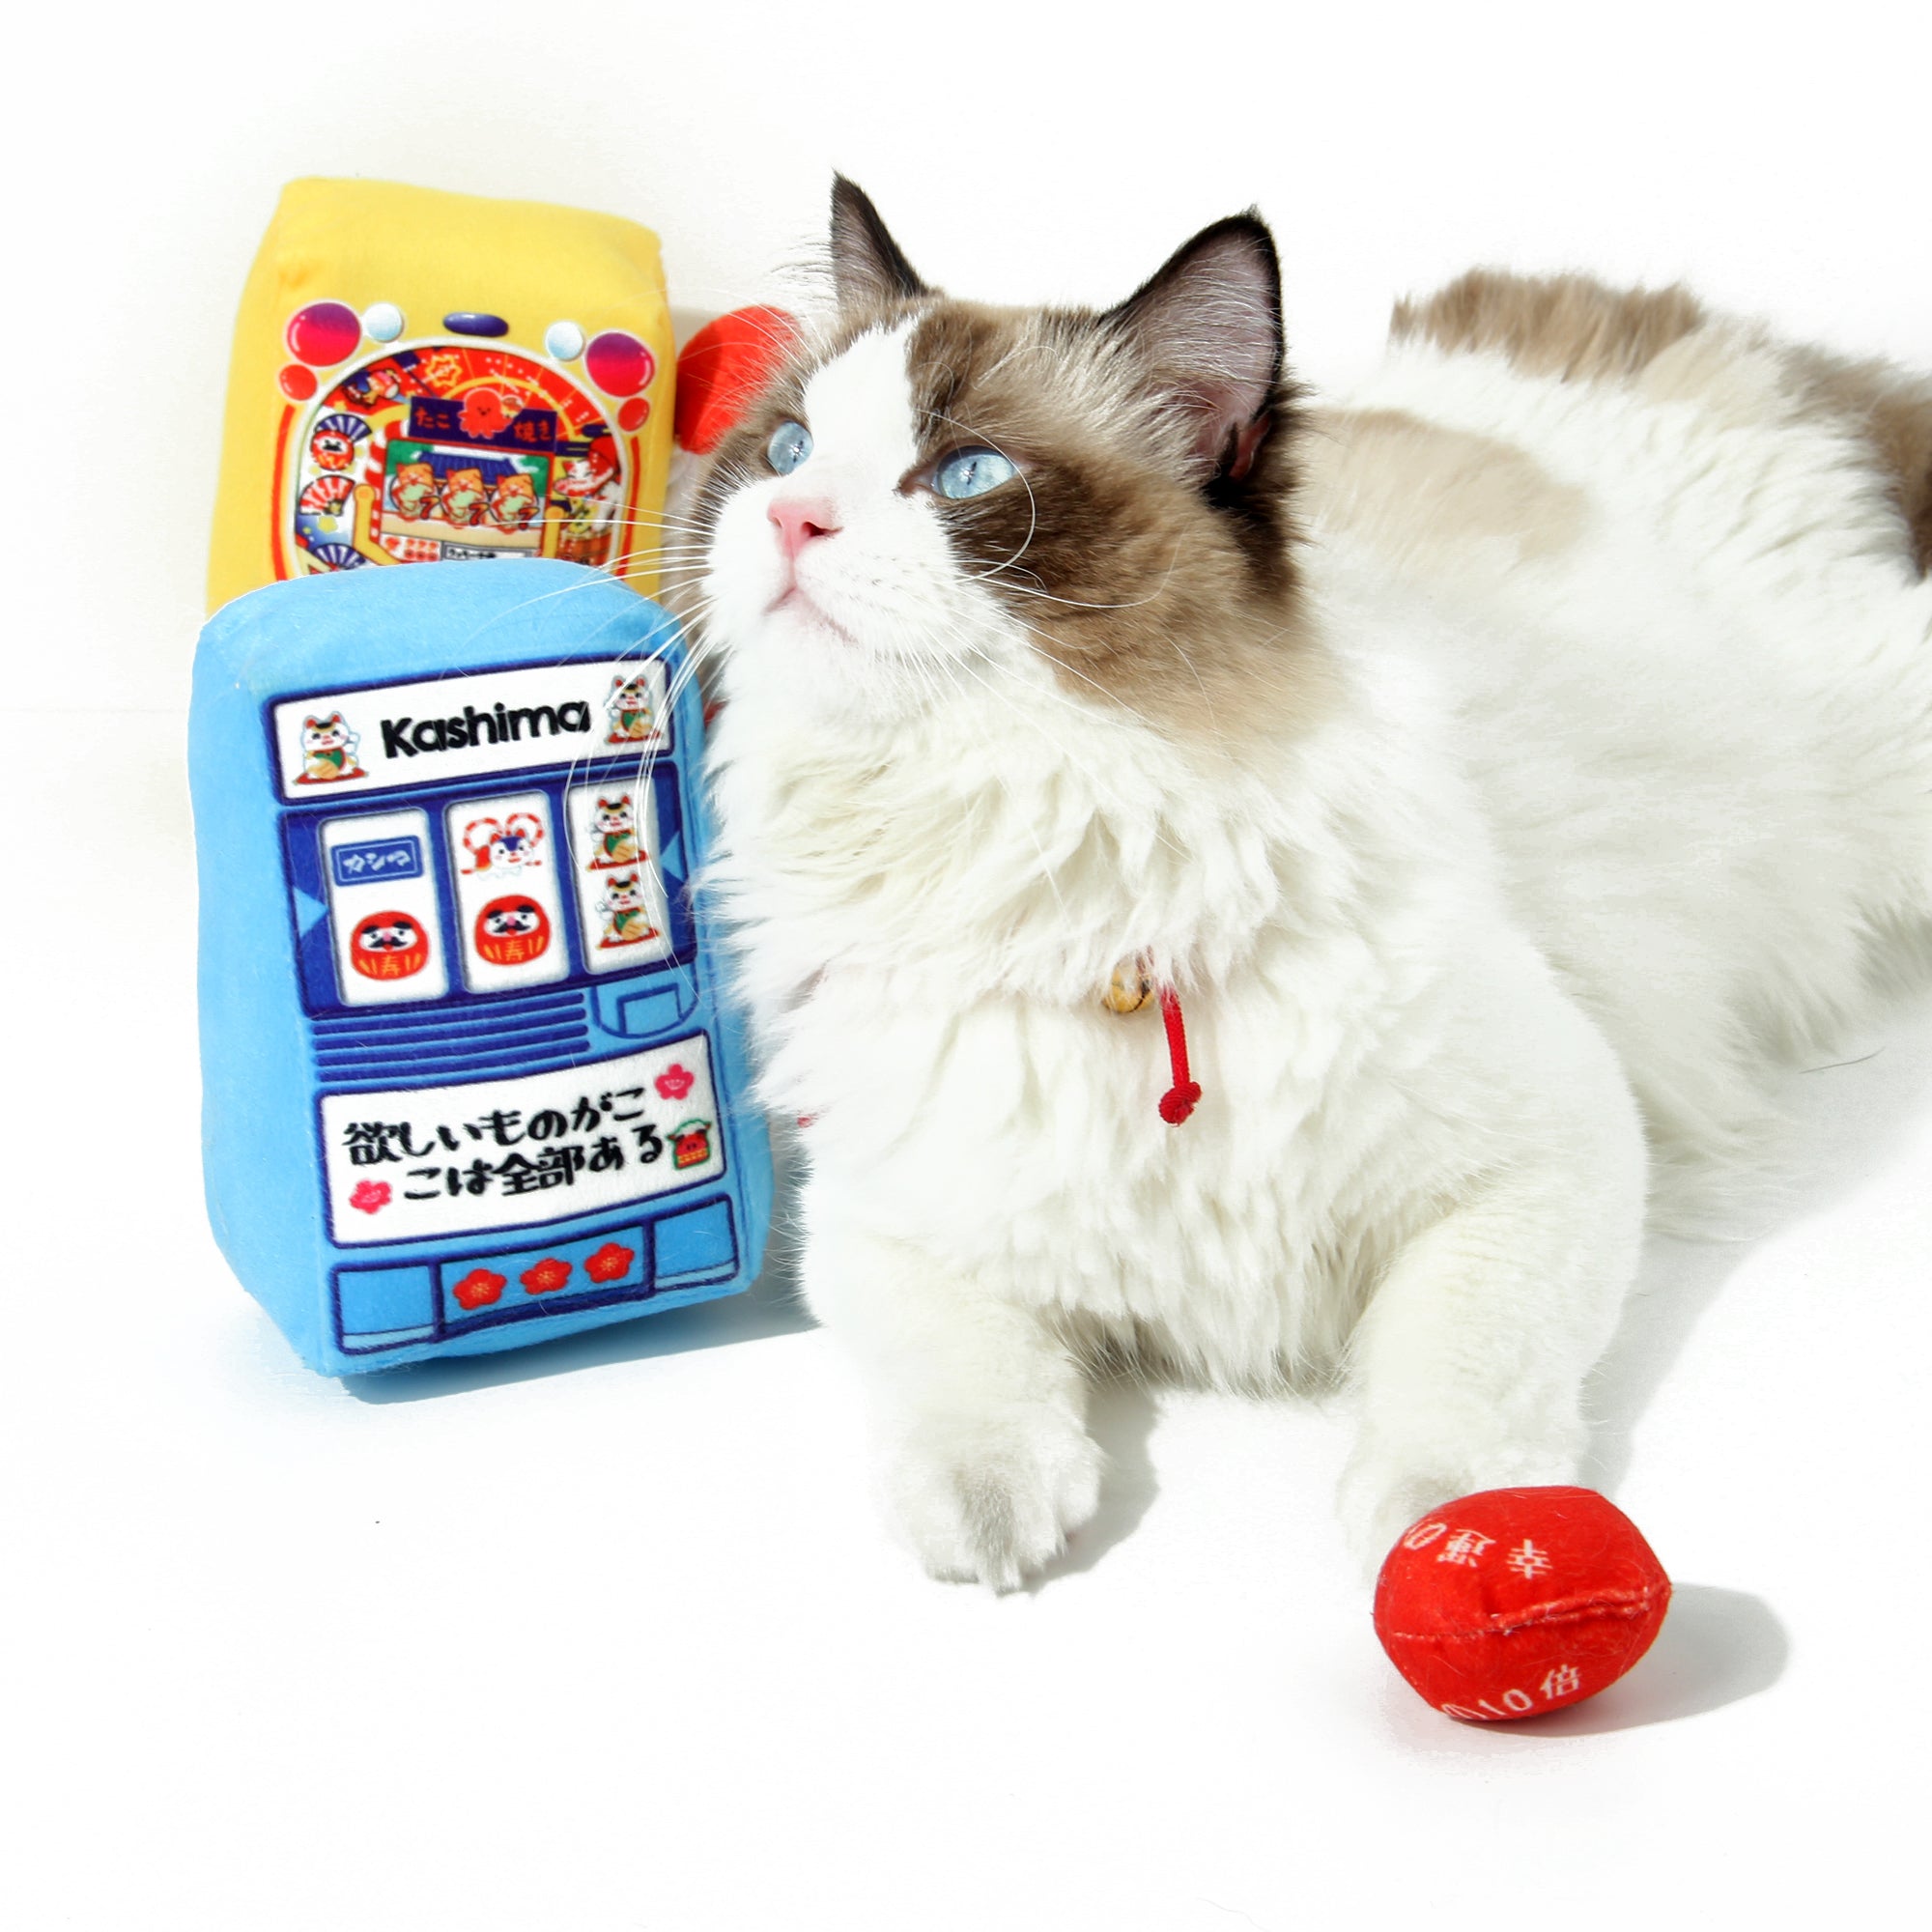 Kashima Game Machine Shaped Pet Toy